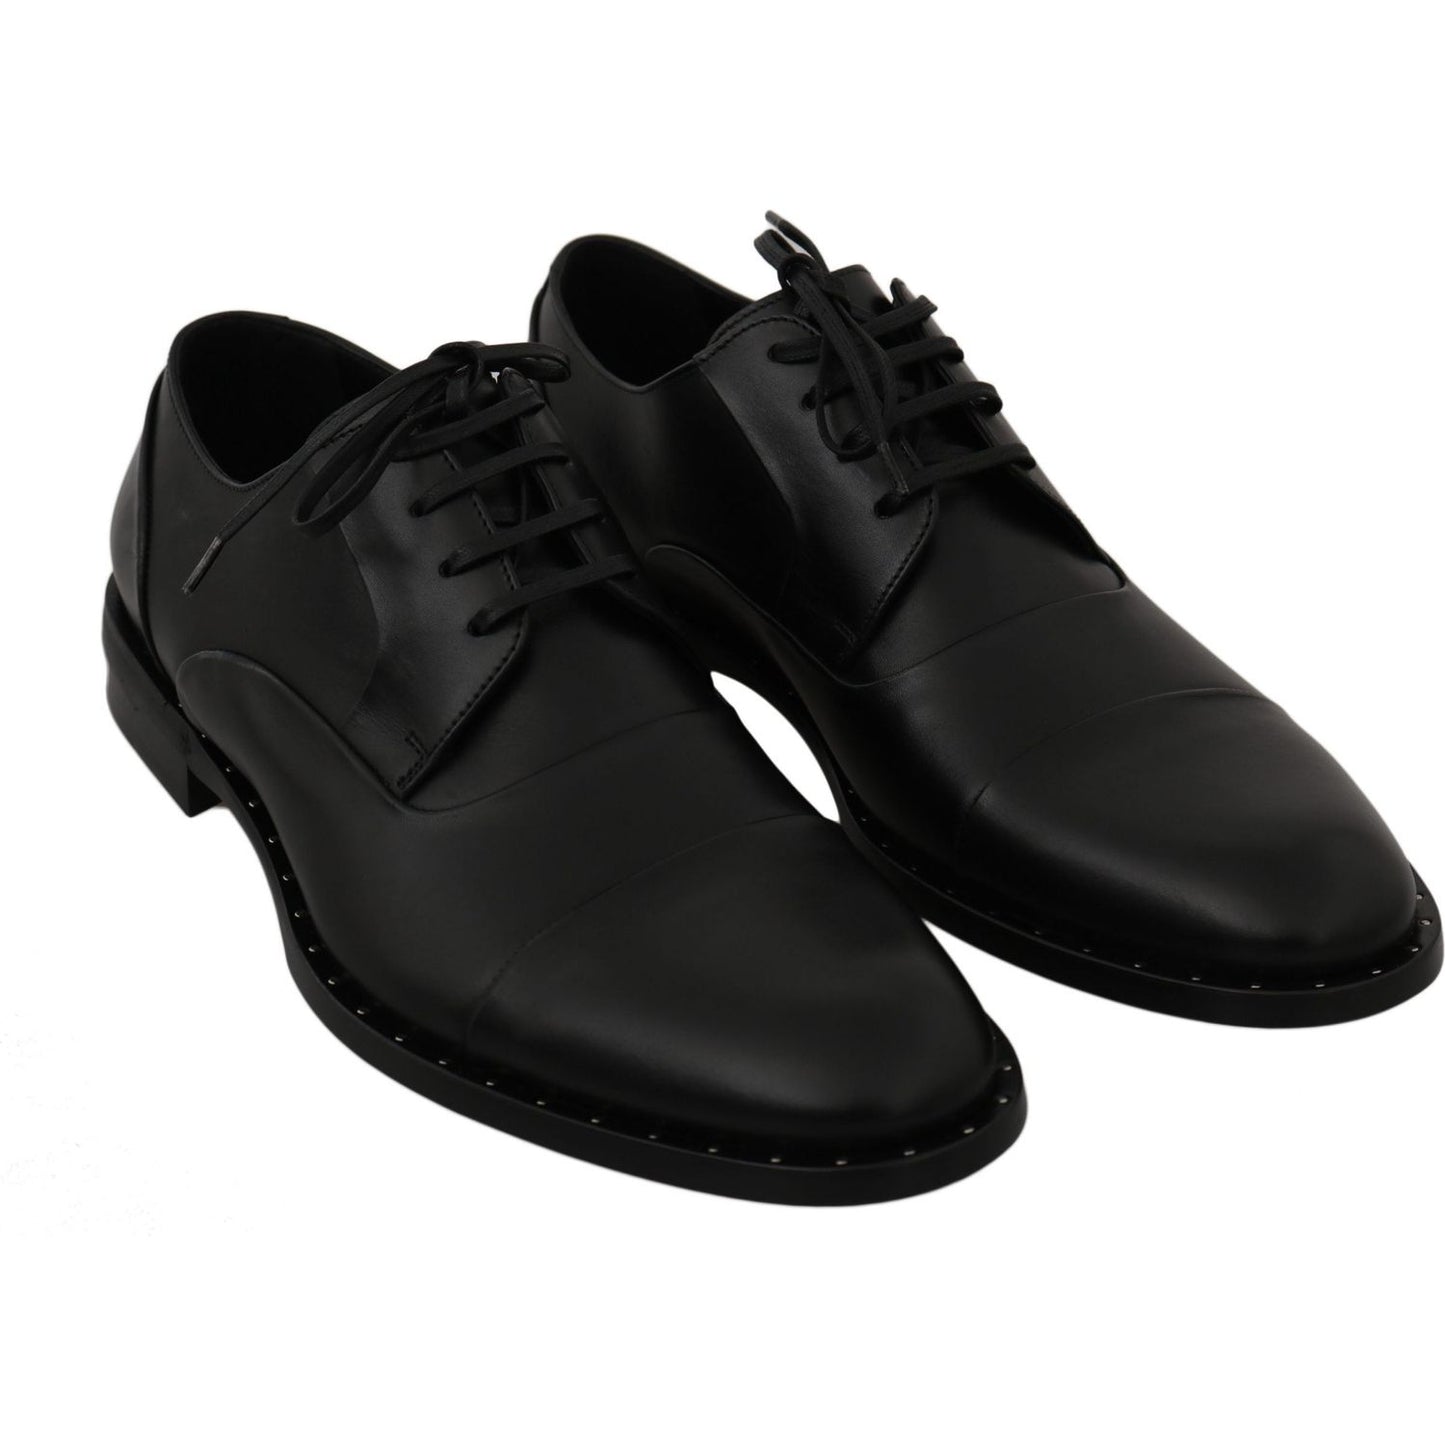 Dolce & Gabbana Sleek Black Leather Formal Dress Shoes Dress Shoes black-leather-derby-formal-shoes